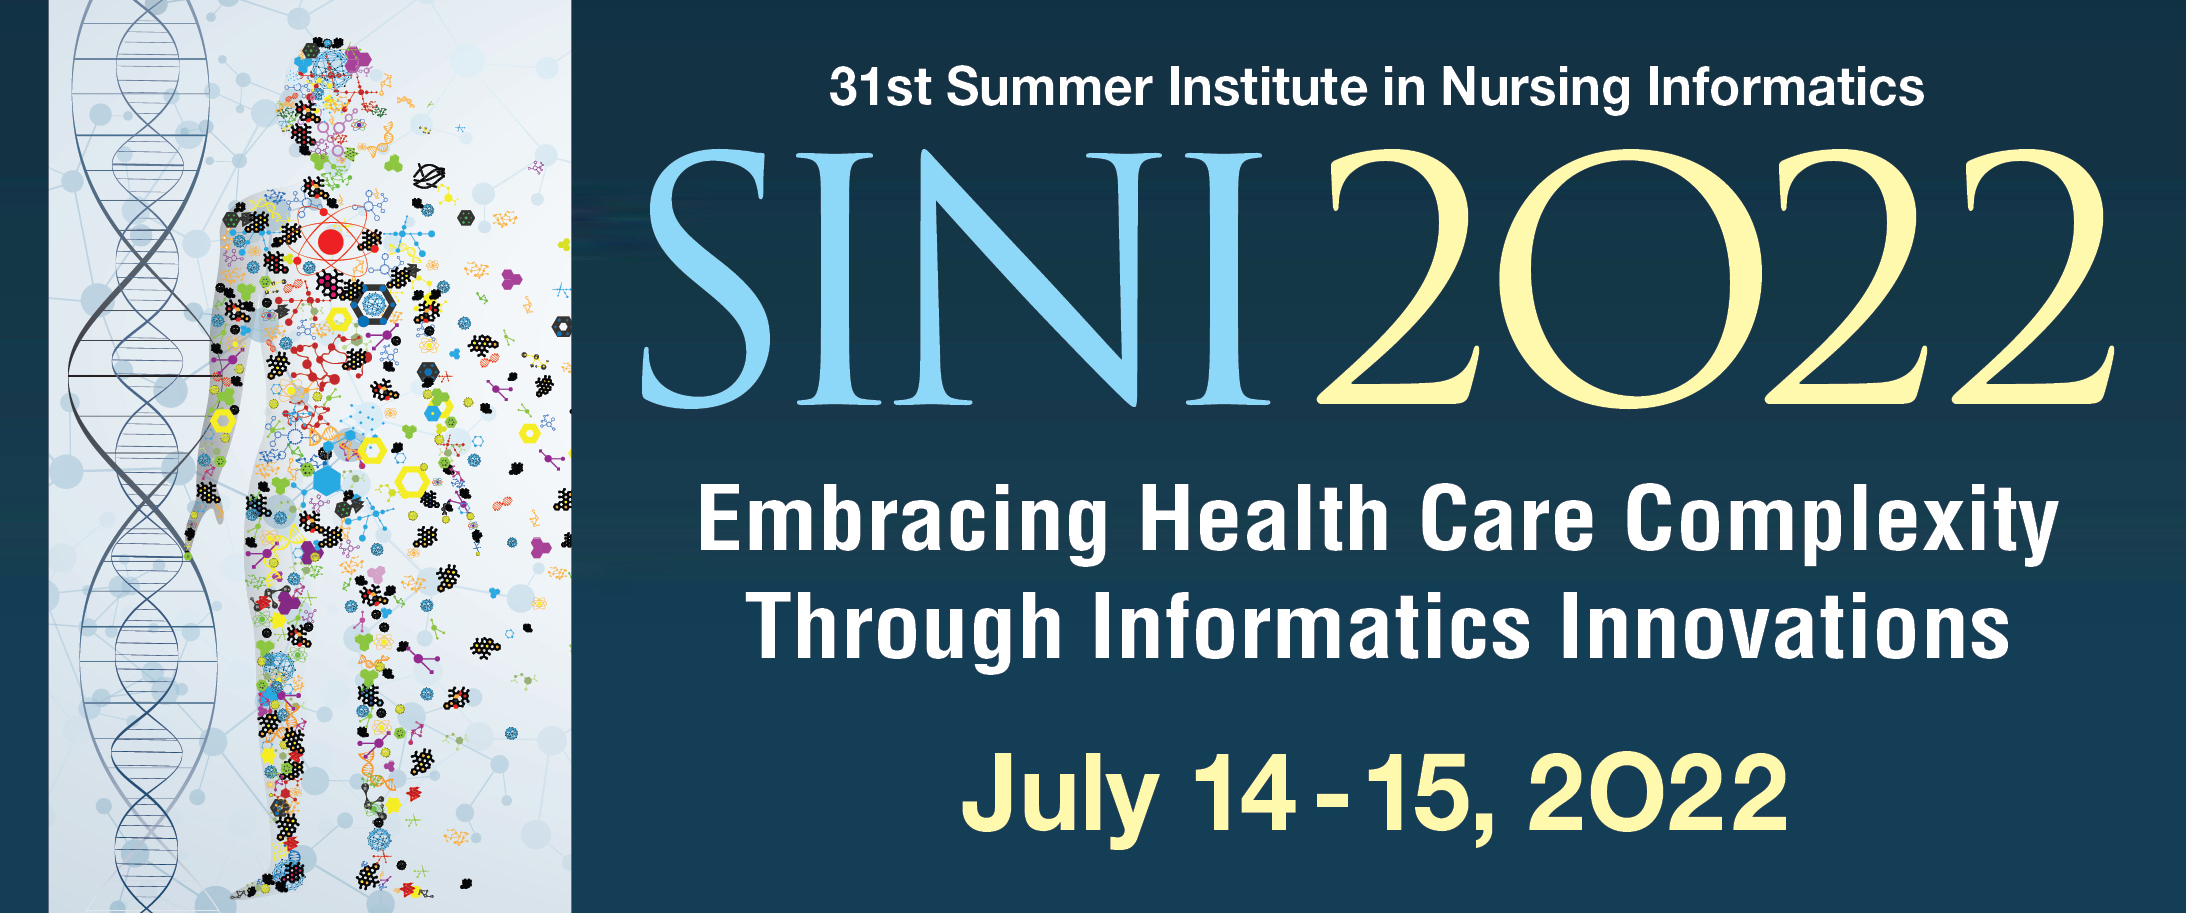 31st Summer Institute in Nursing Informatics